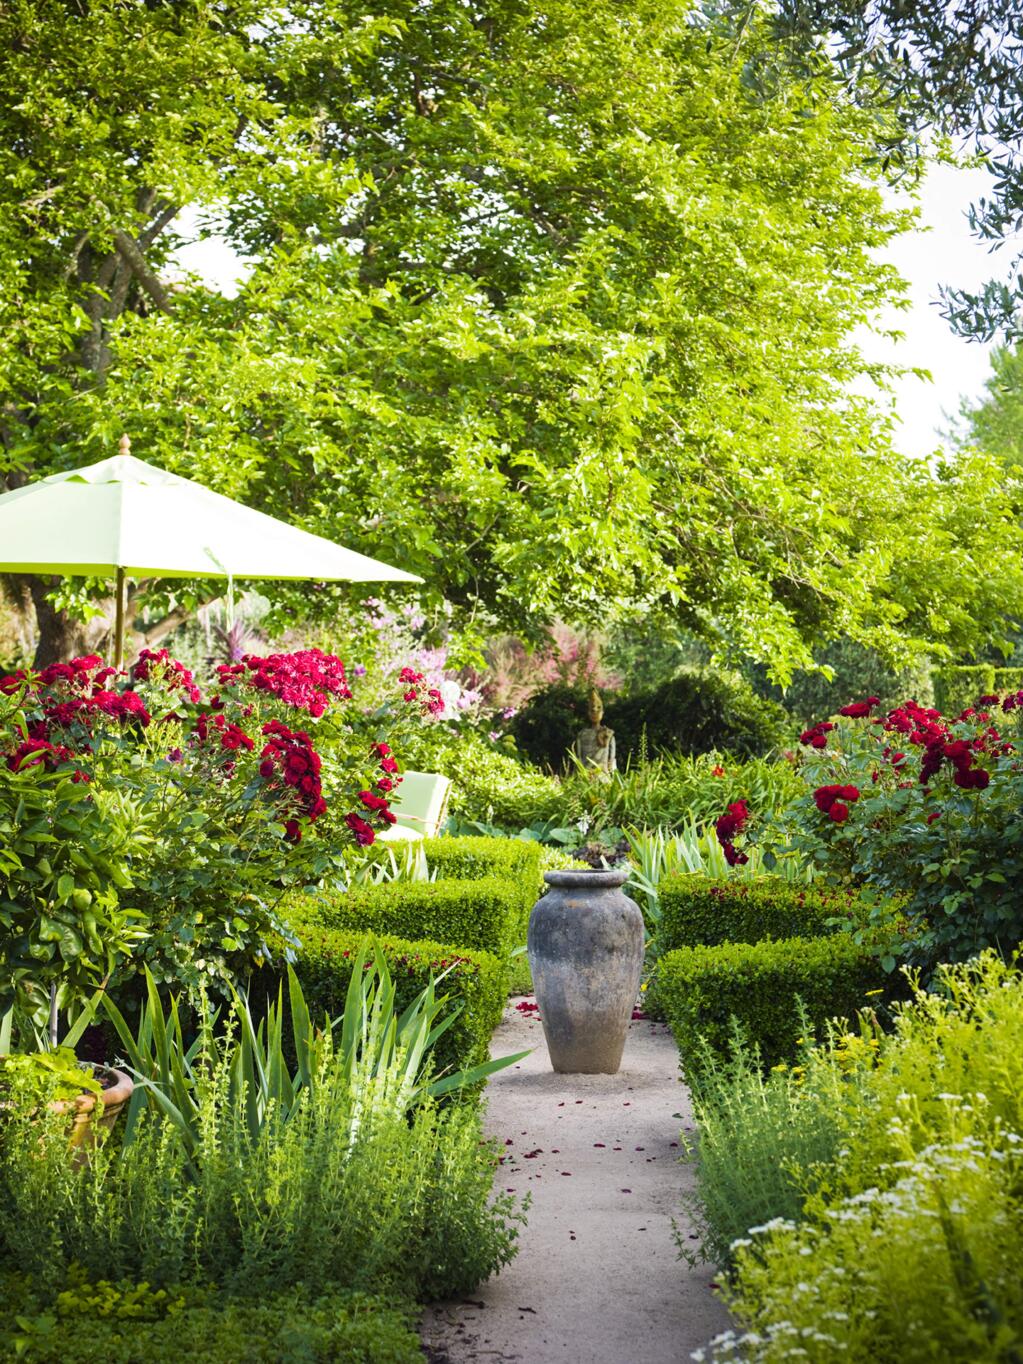 Take a walk through a gorgeous flower garden, like Quarryhill Botanical Garden for a peaceful, romantic stroll. (Photo / Thomas J. Story)